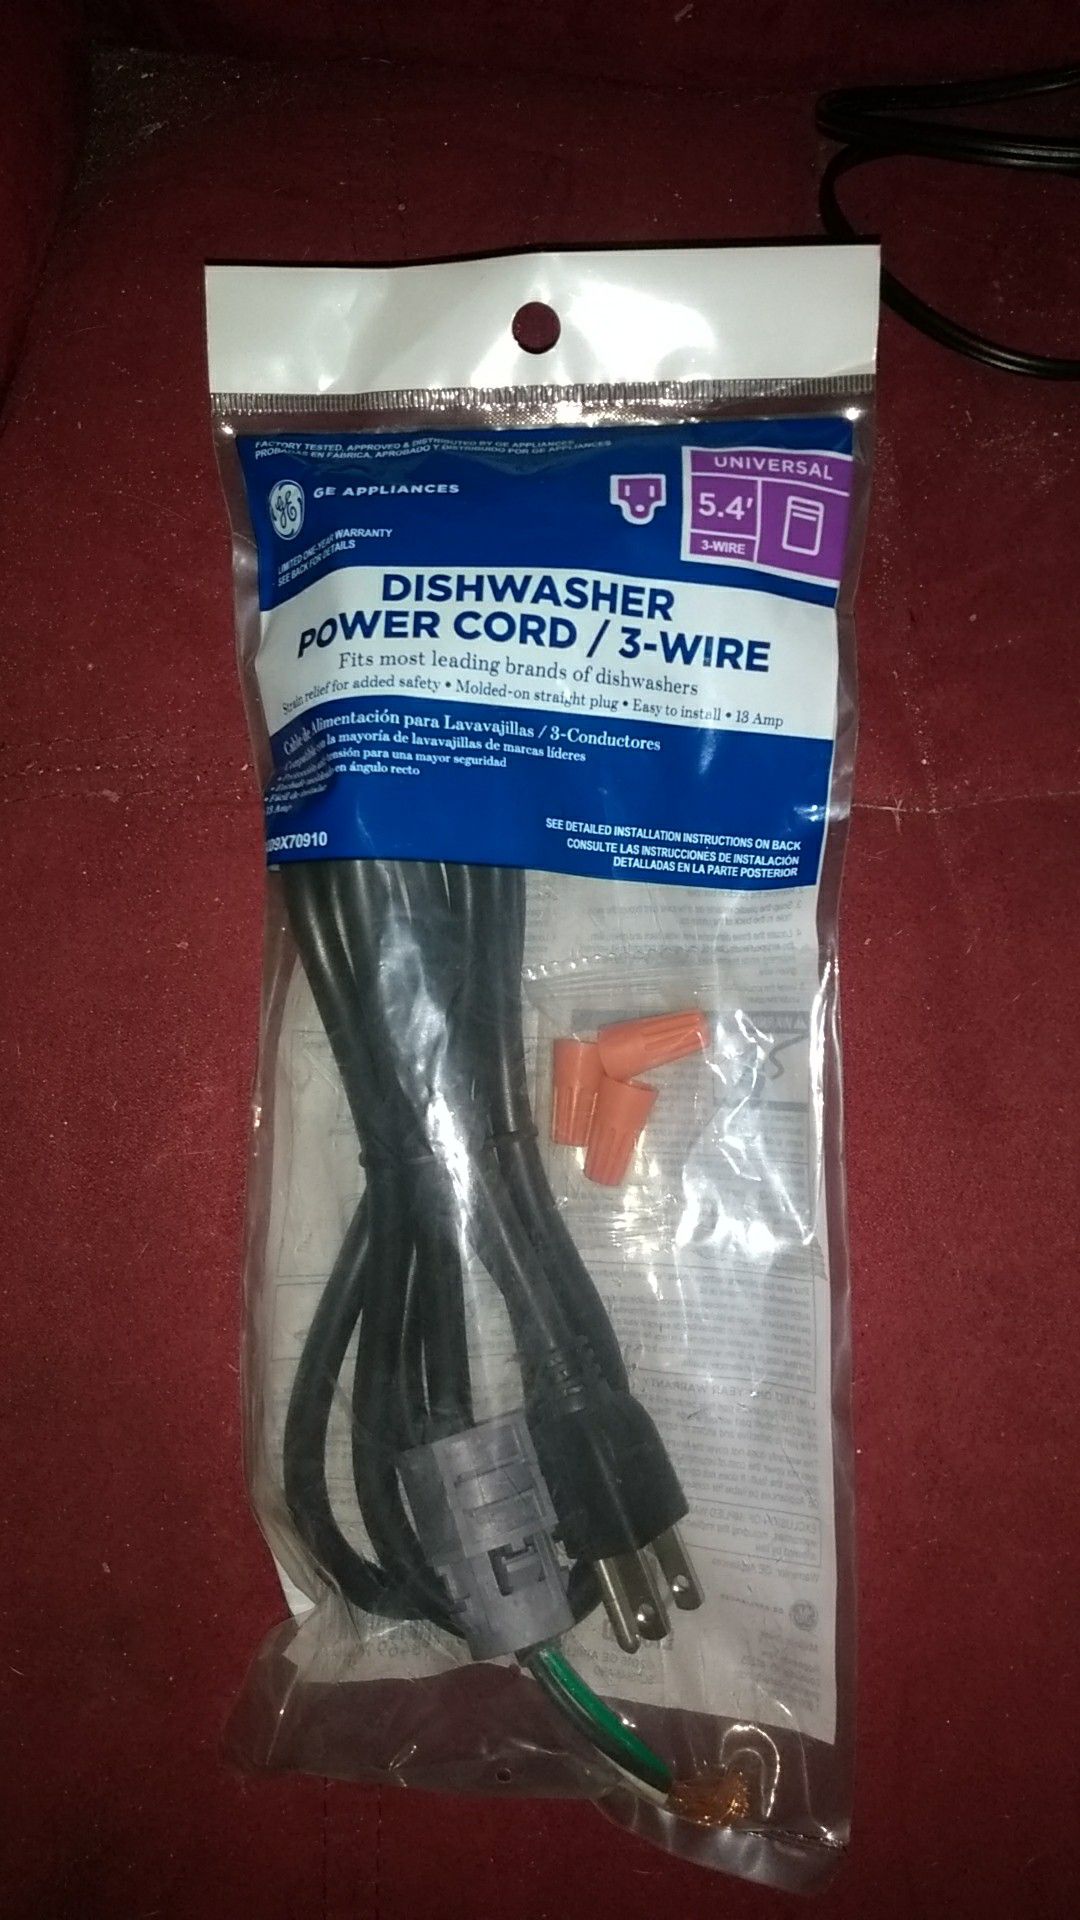 GE universal dishwasher power cord